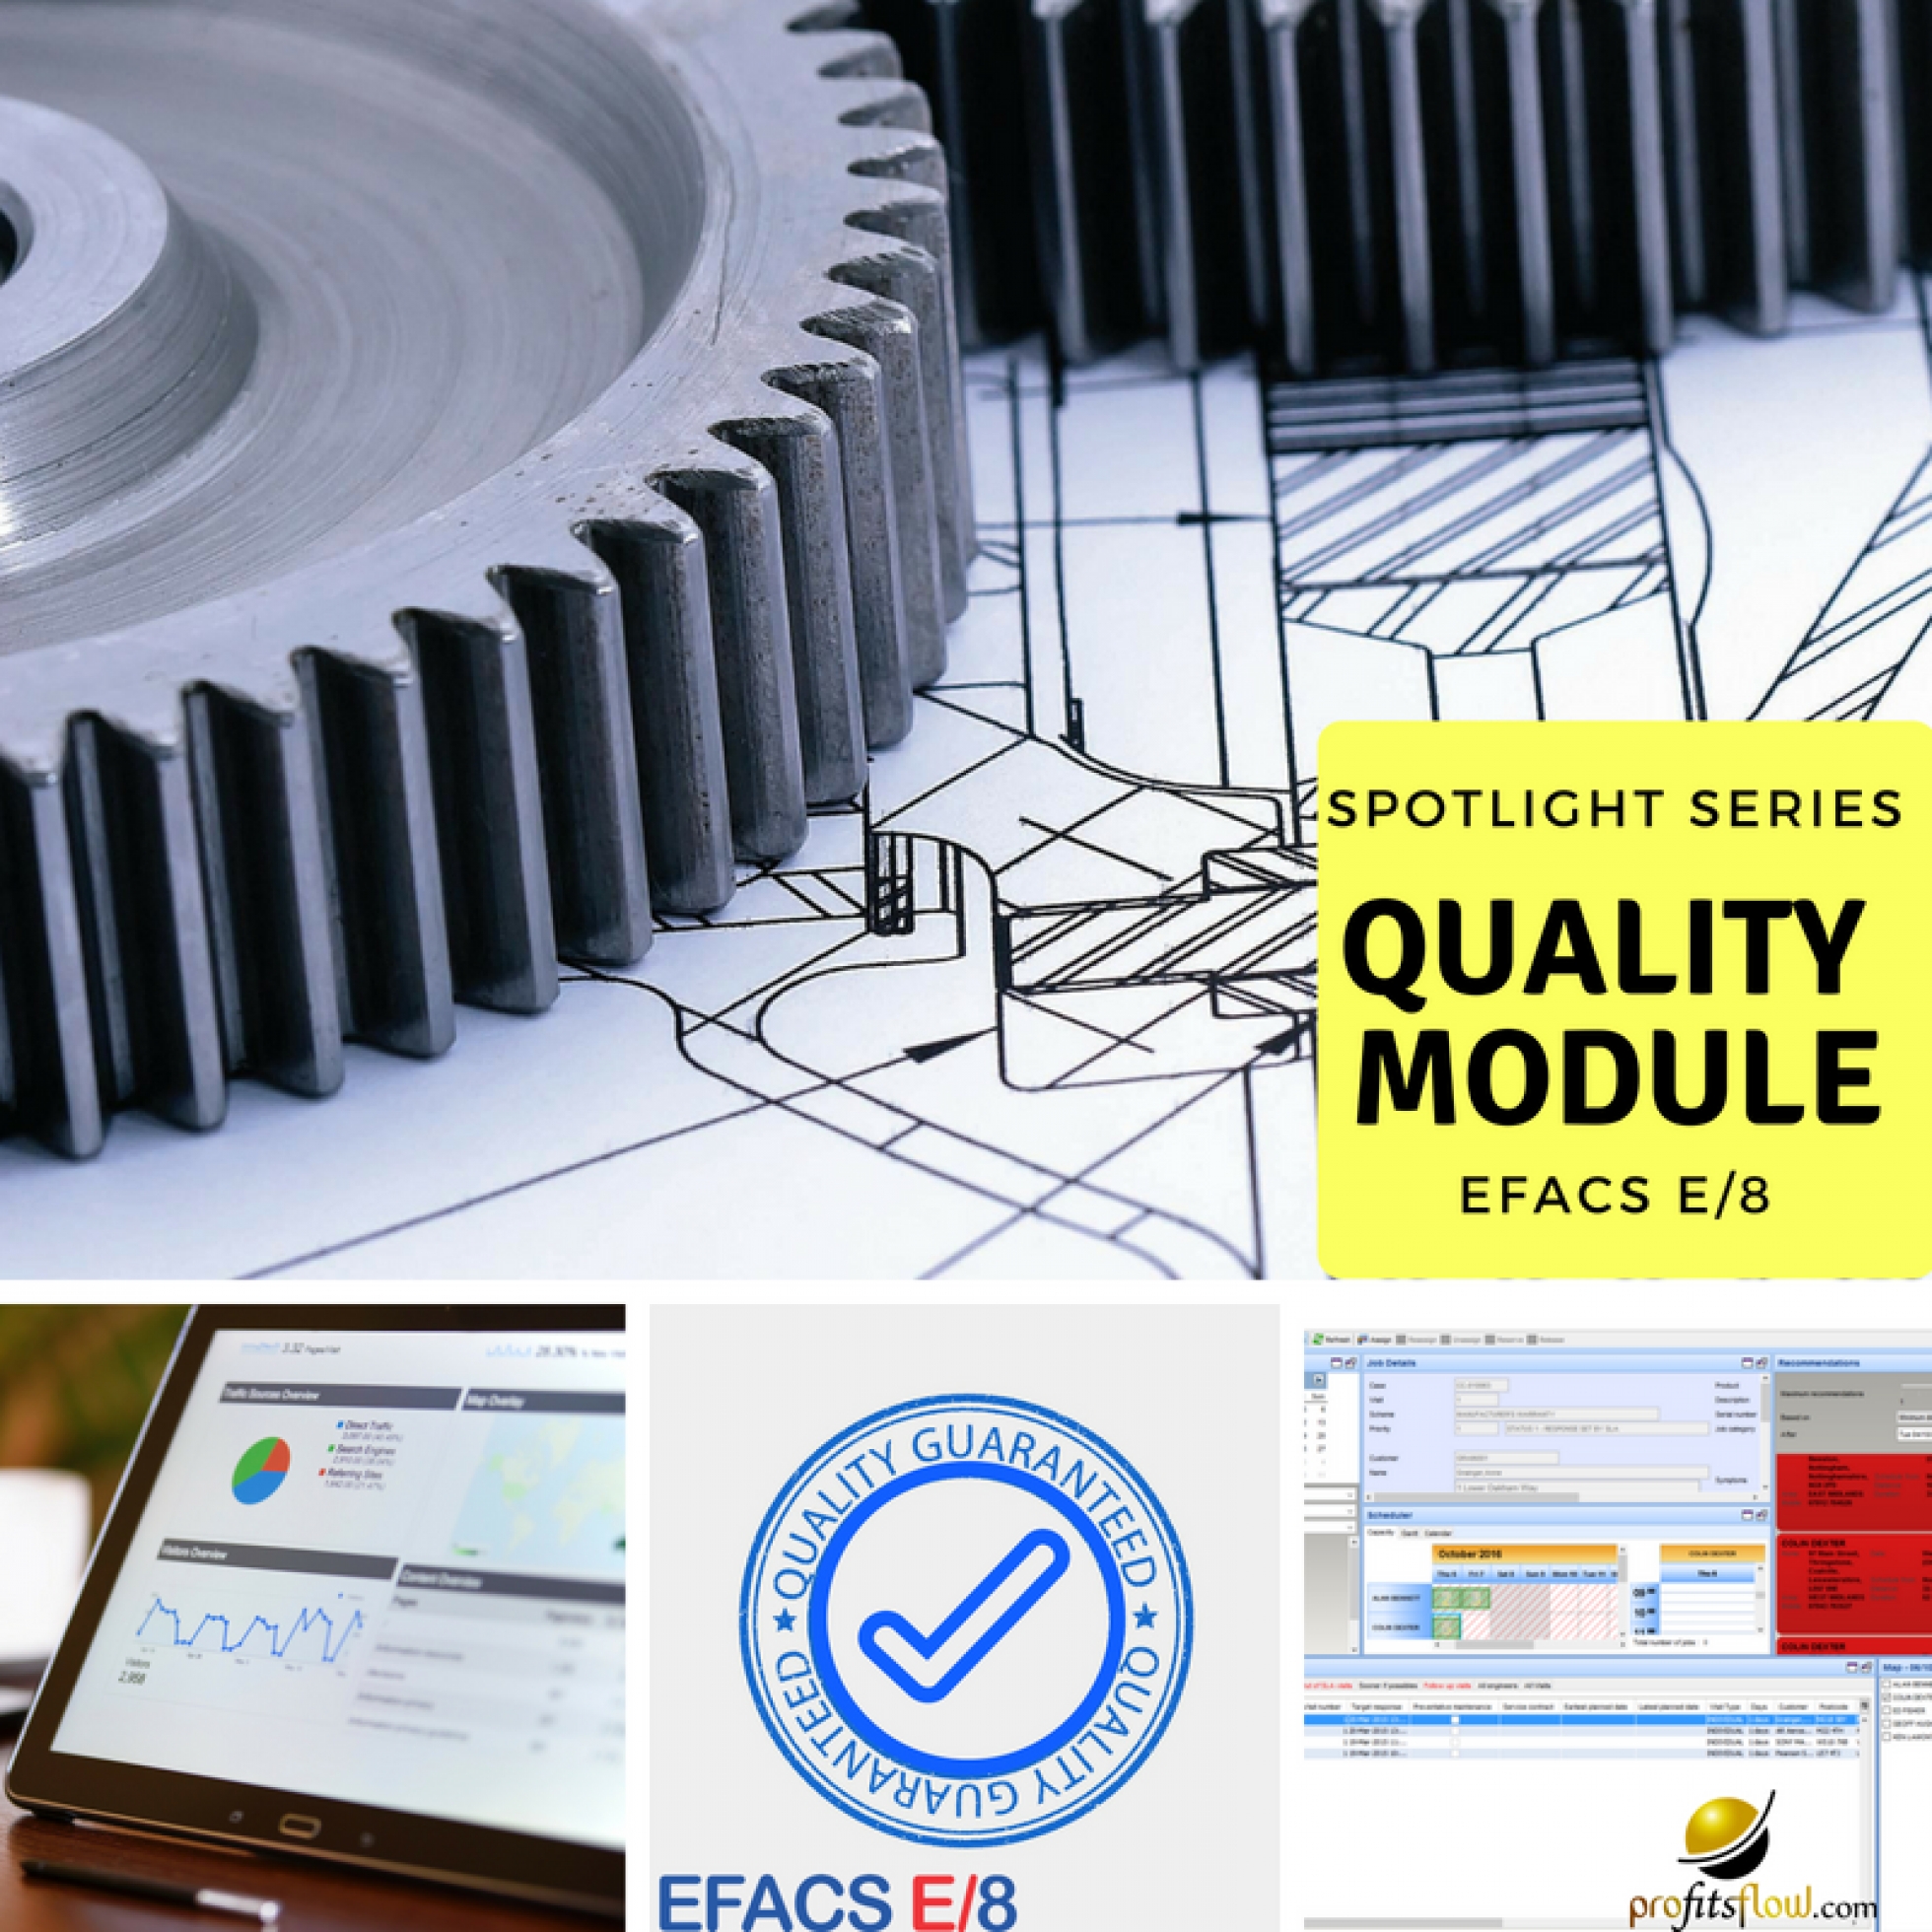 Spotlight Series: Quality Module within EFACS E/8